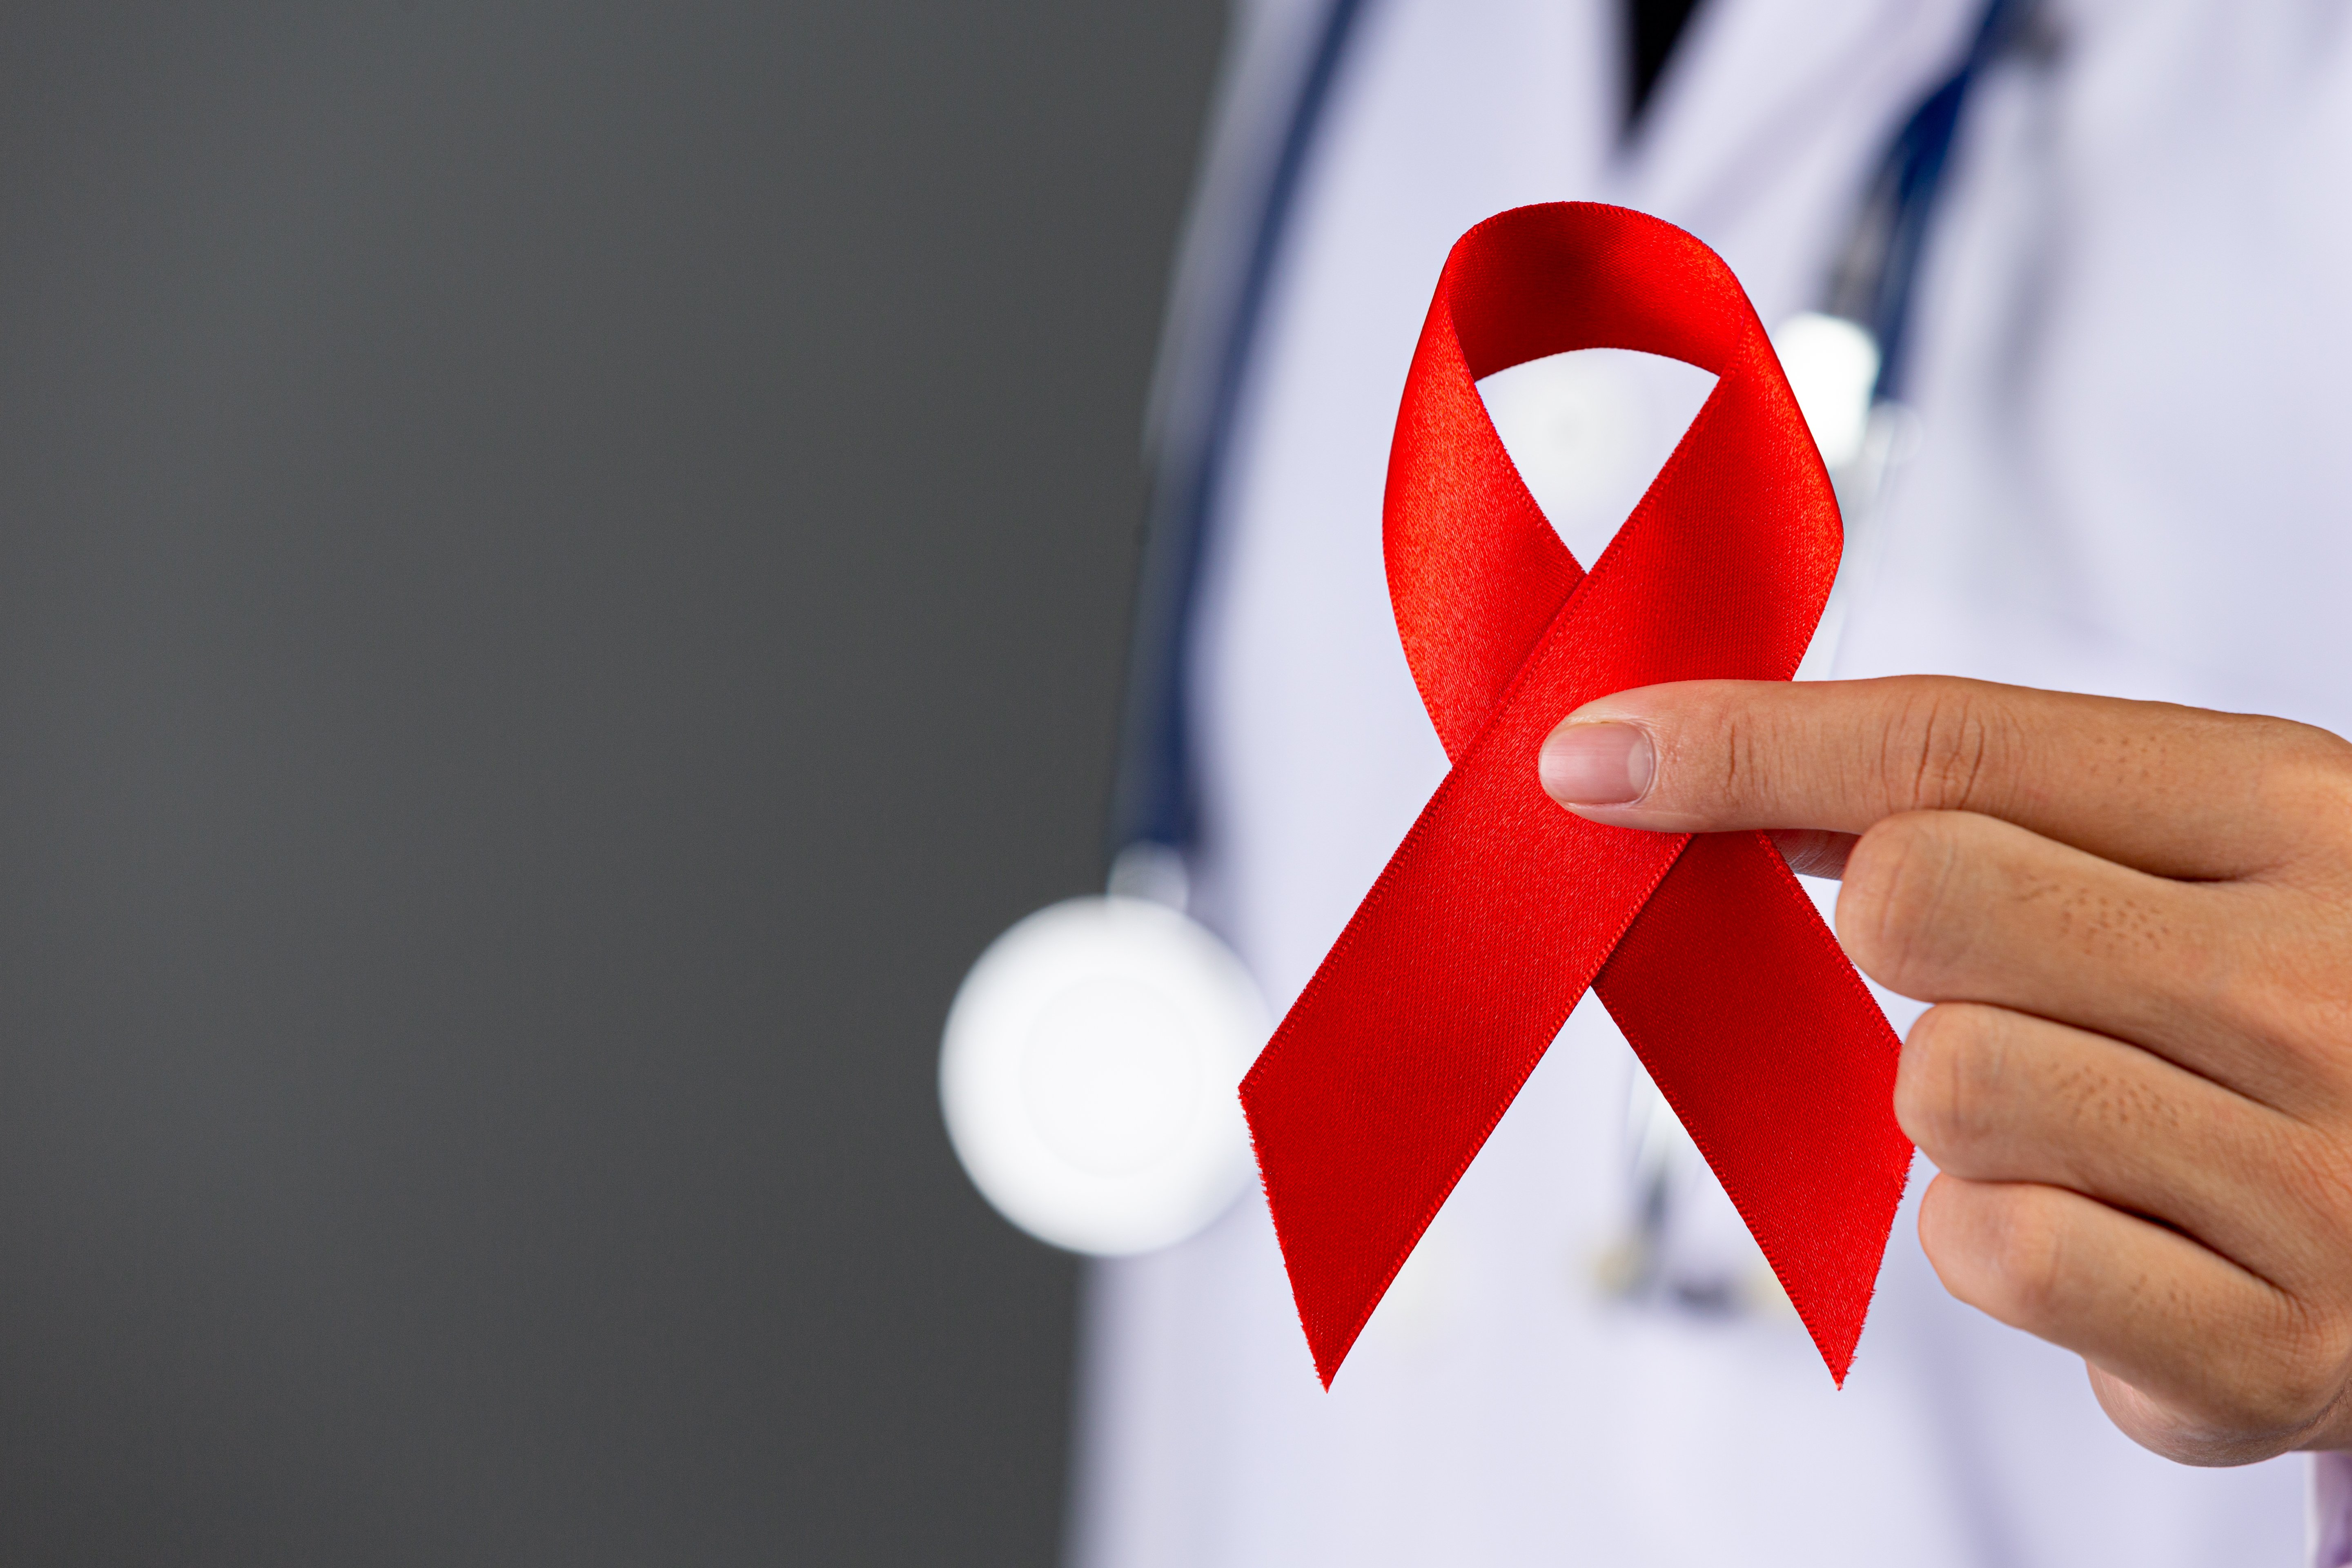 Autotest dépistage VIH / SIDA - Pharmacie IllicoPharma